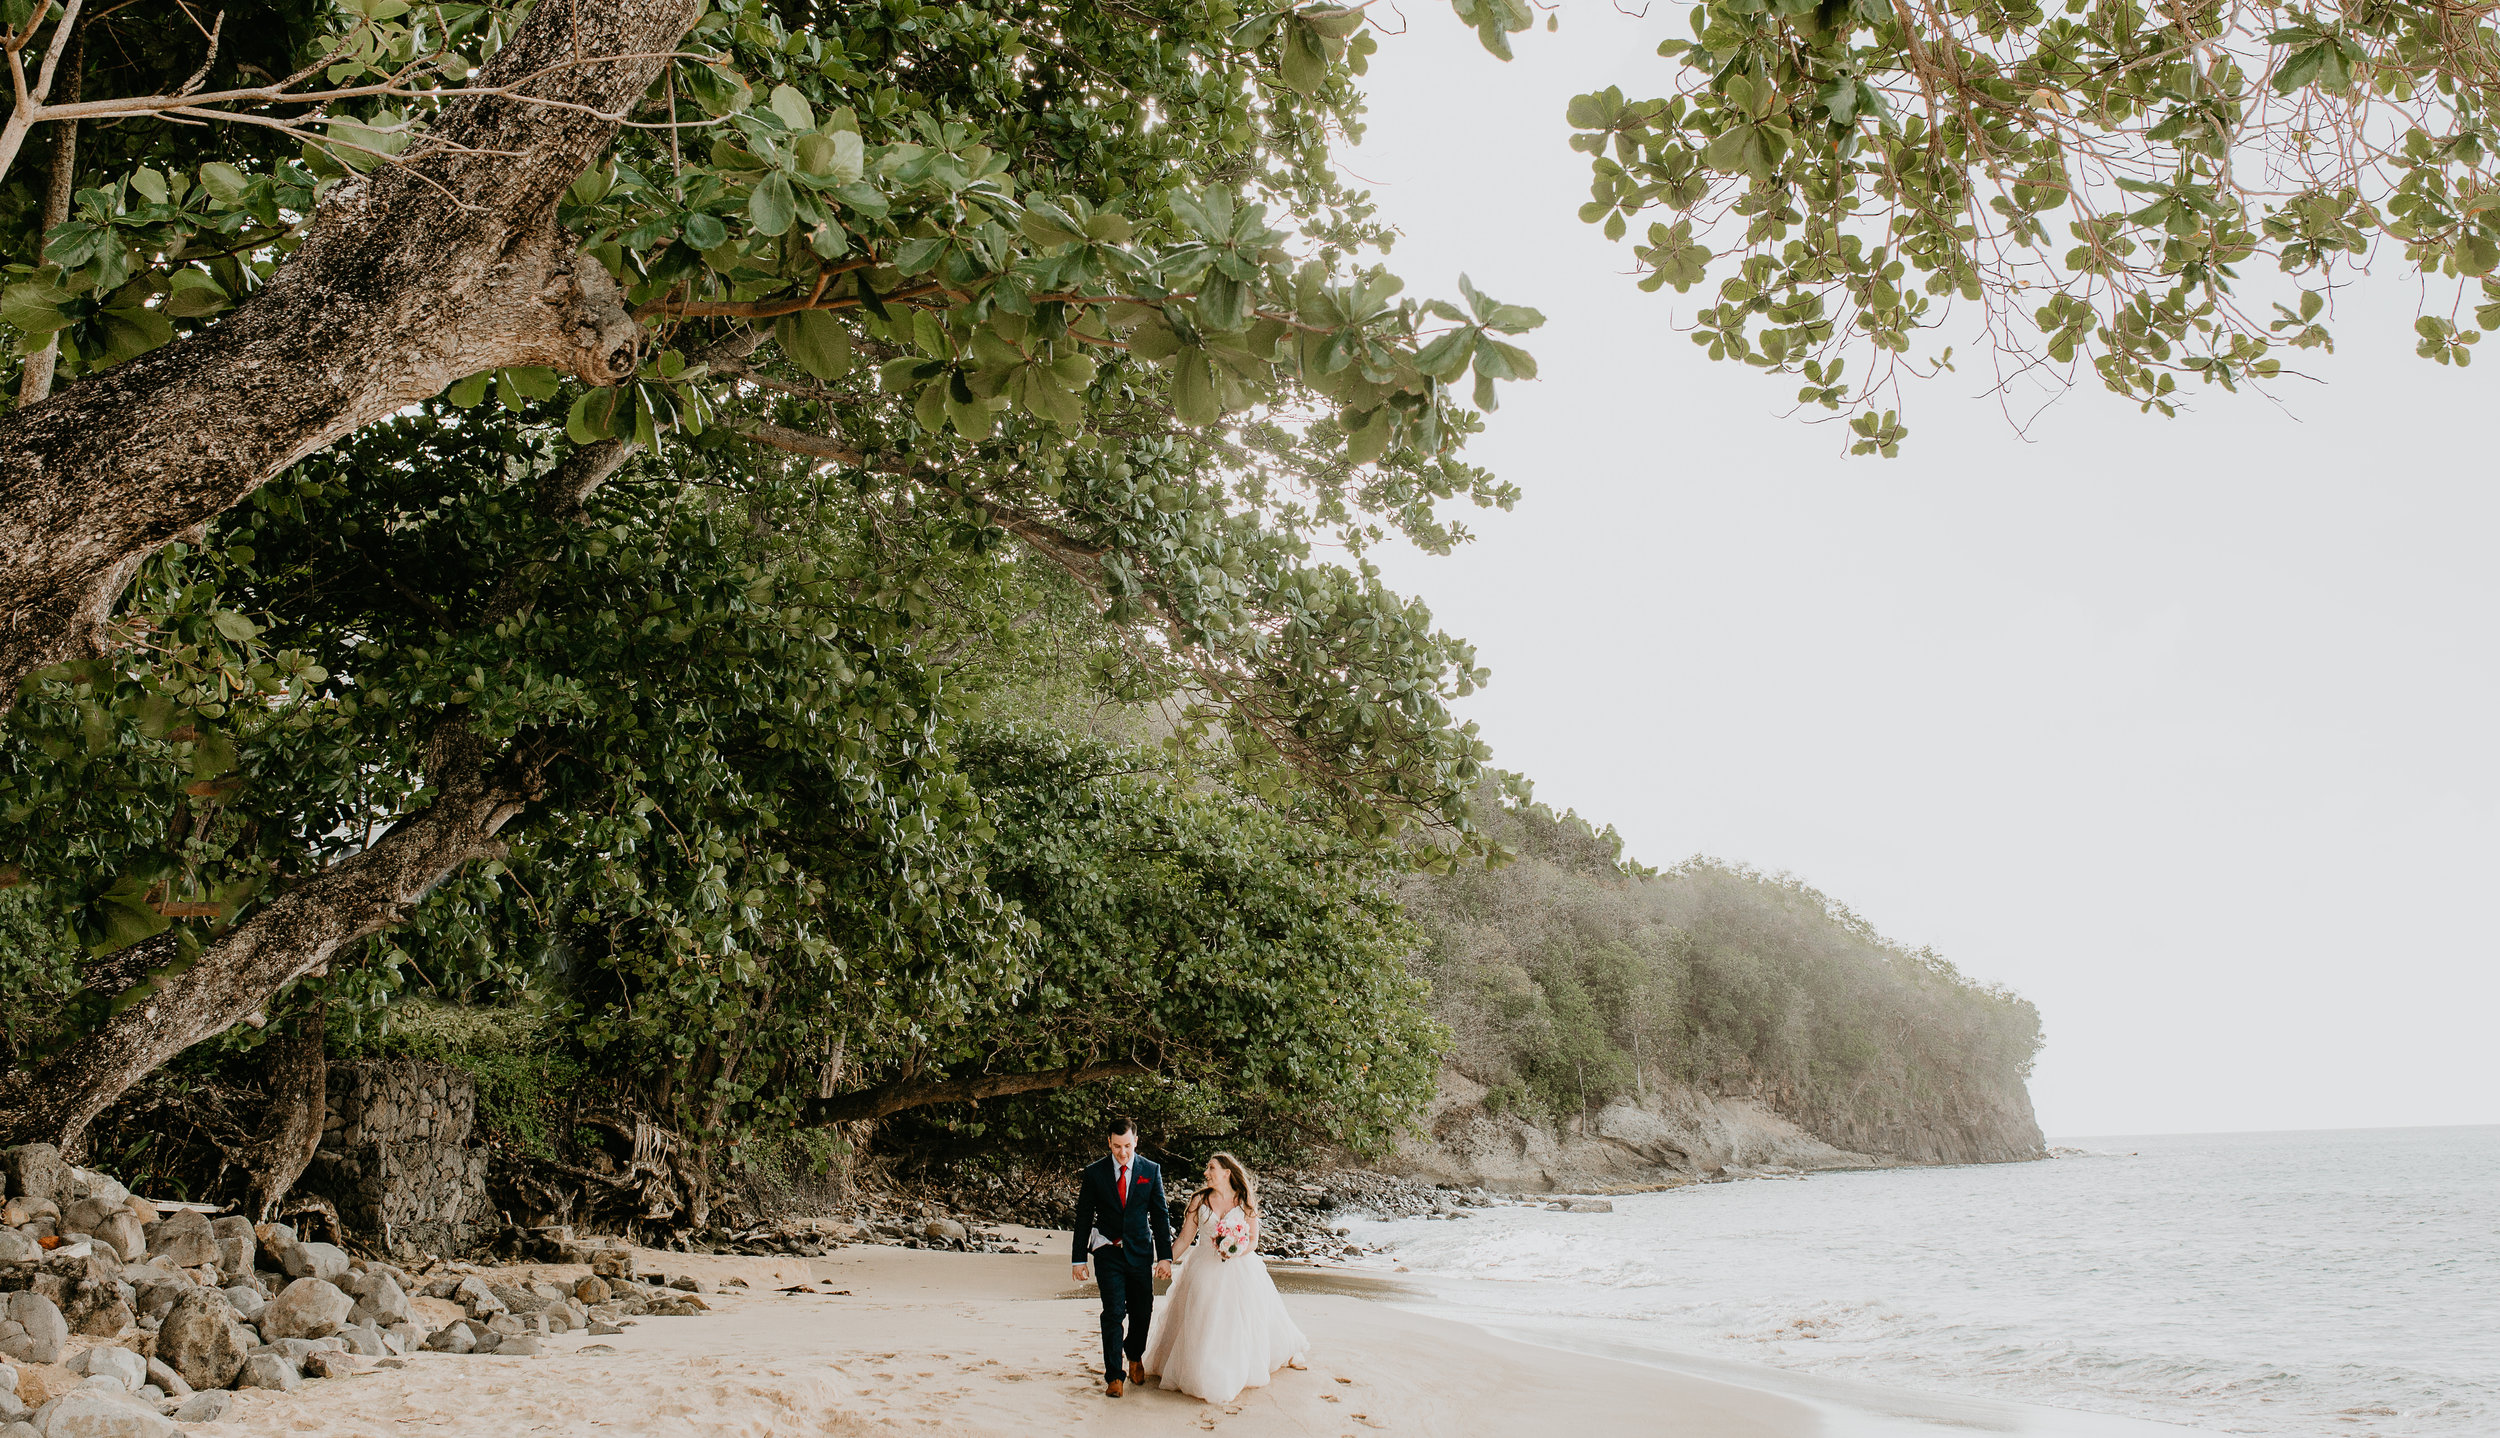 nicole-daacke-photography-destination-wedding-in-st-lucia-sandals-la-toc-intimate-island-wedding-carribean-elopement-photographer-chill-island-wedding-84.jpg